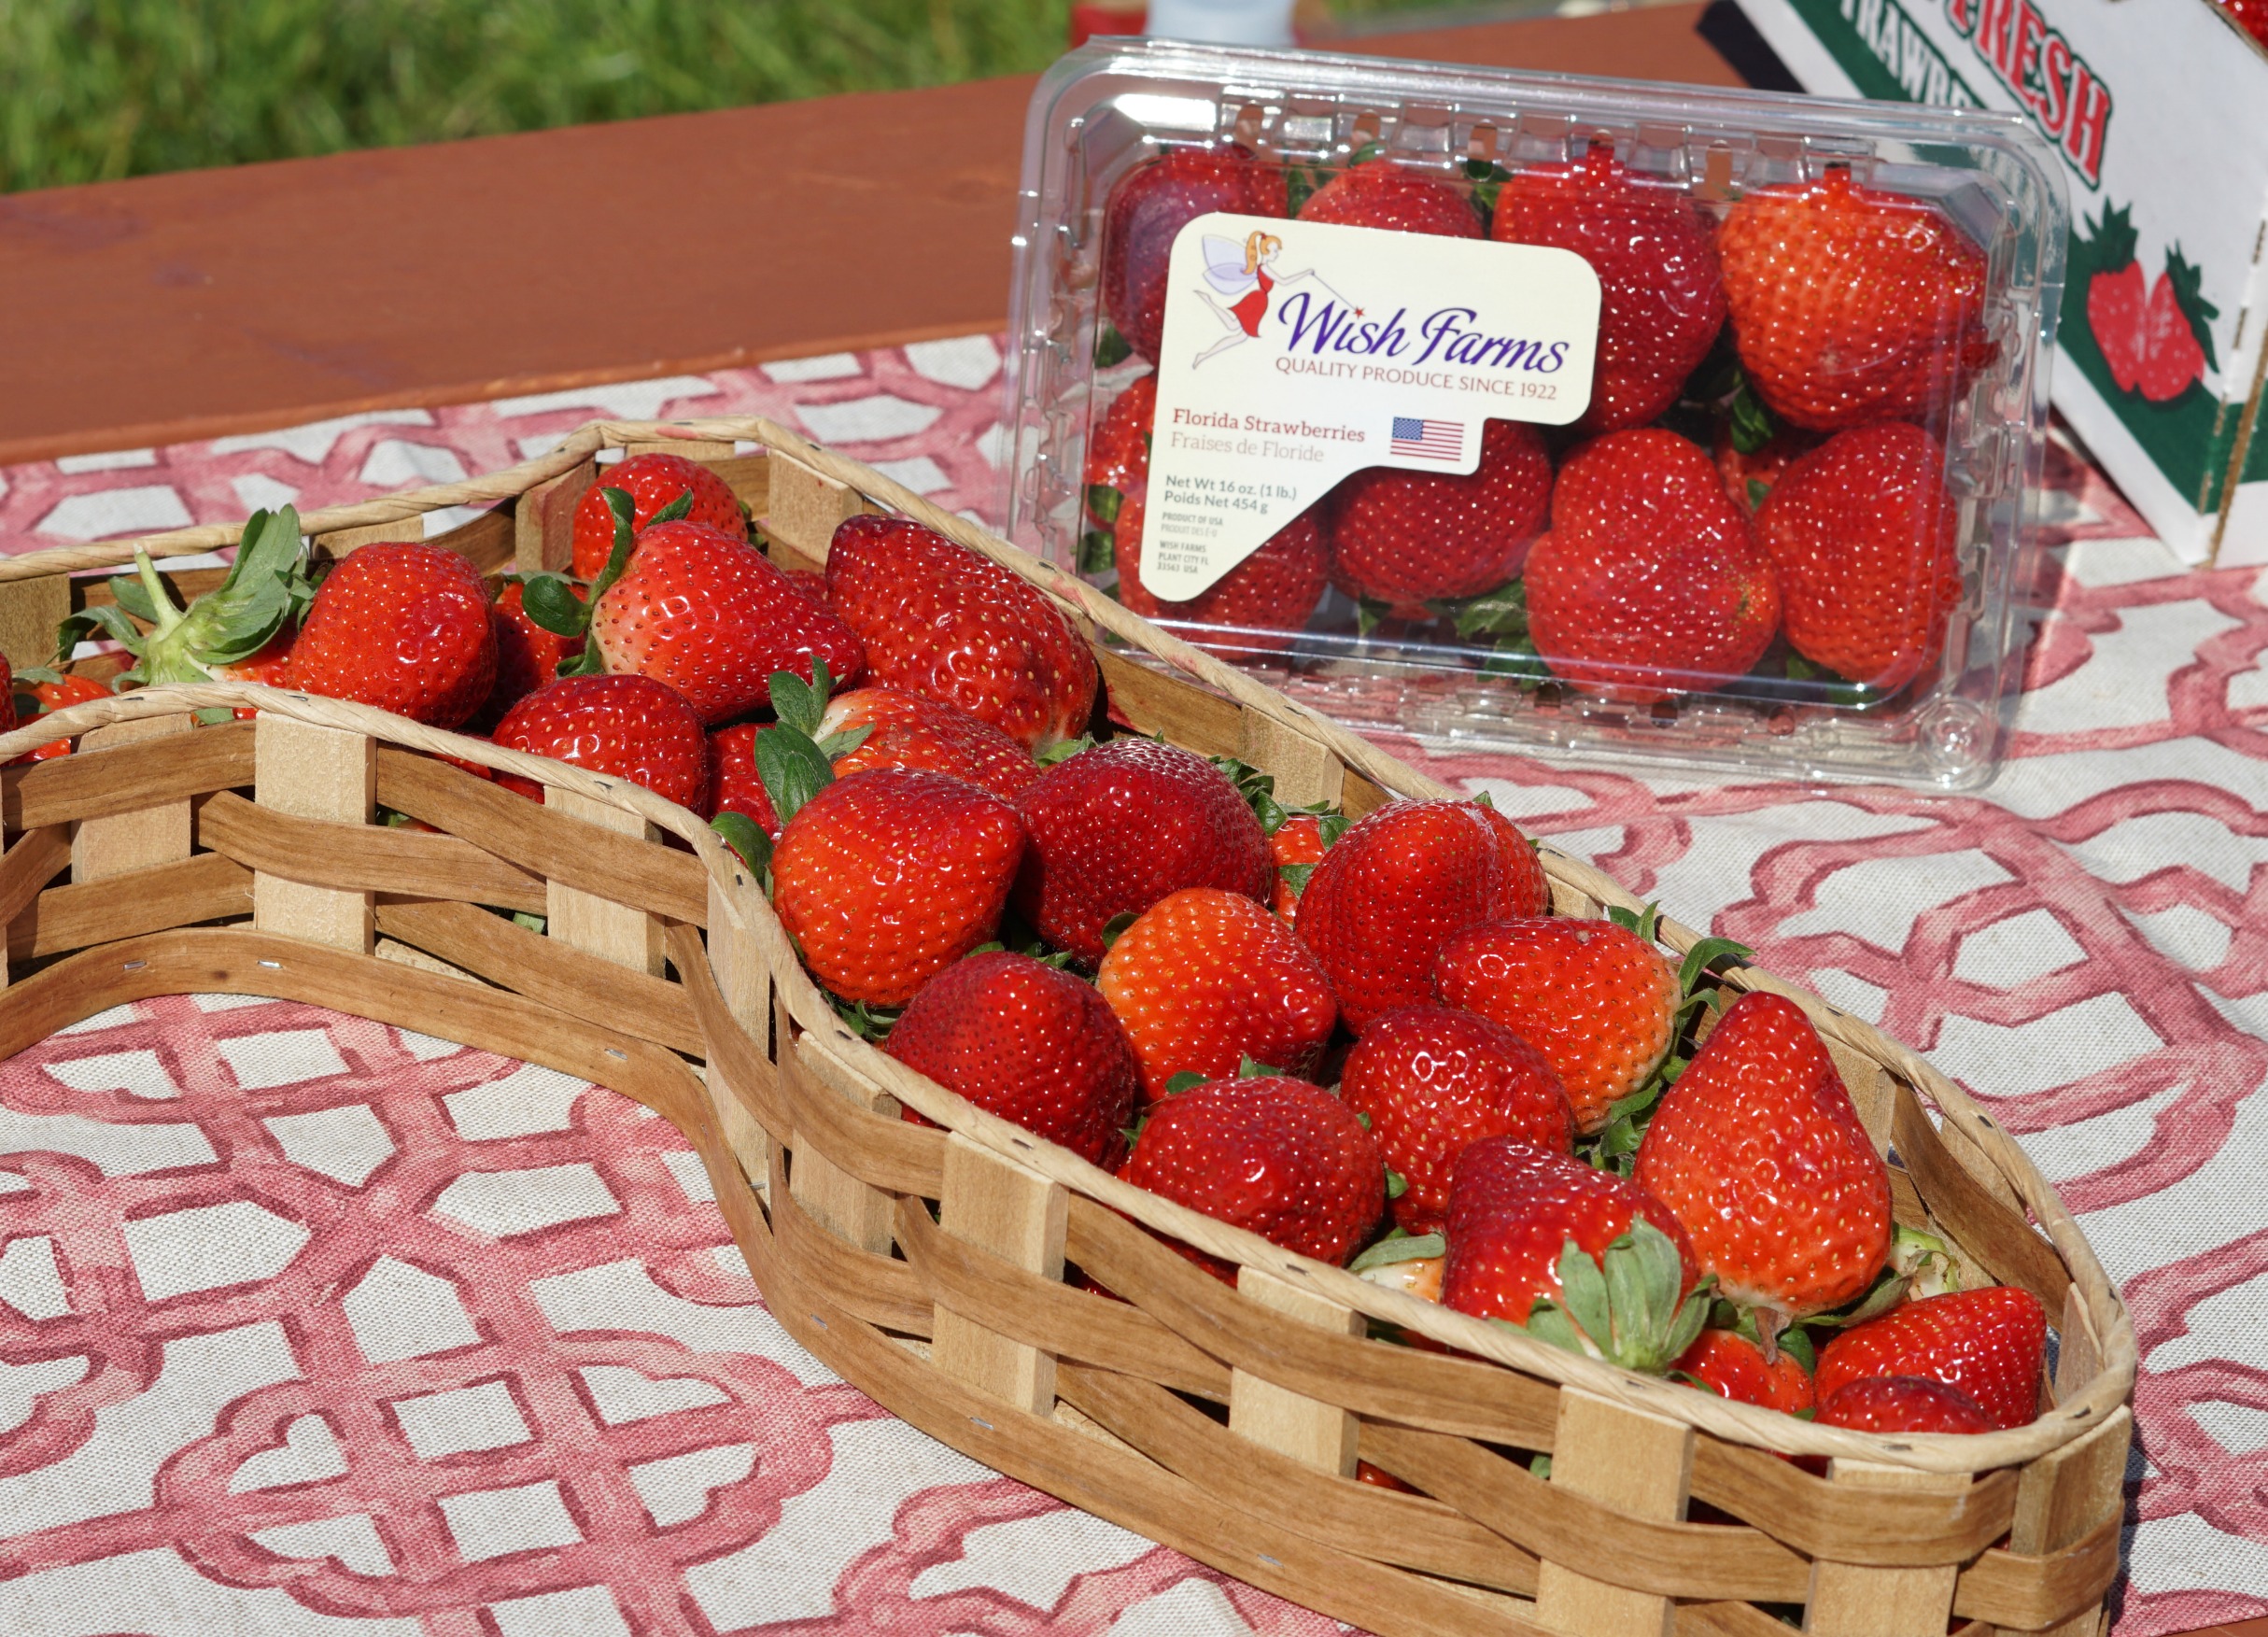 Wish Farms Strawberries Plant City